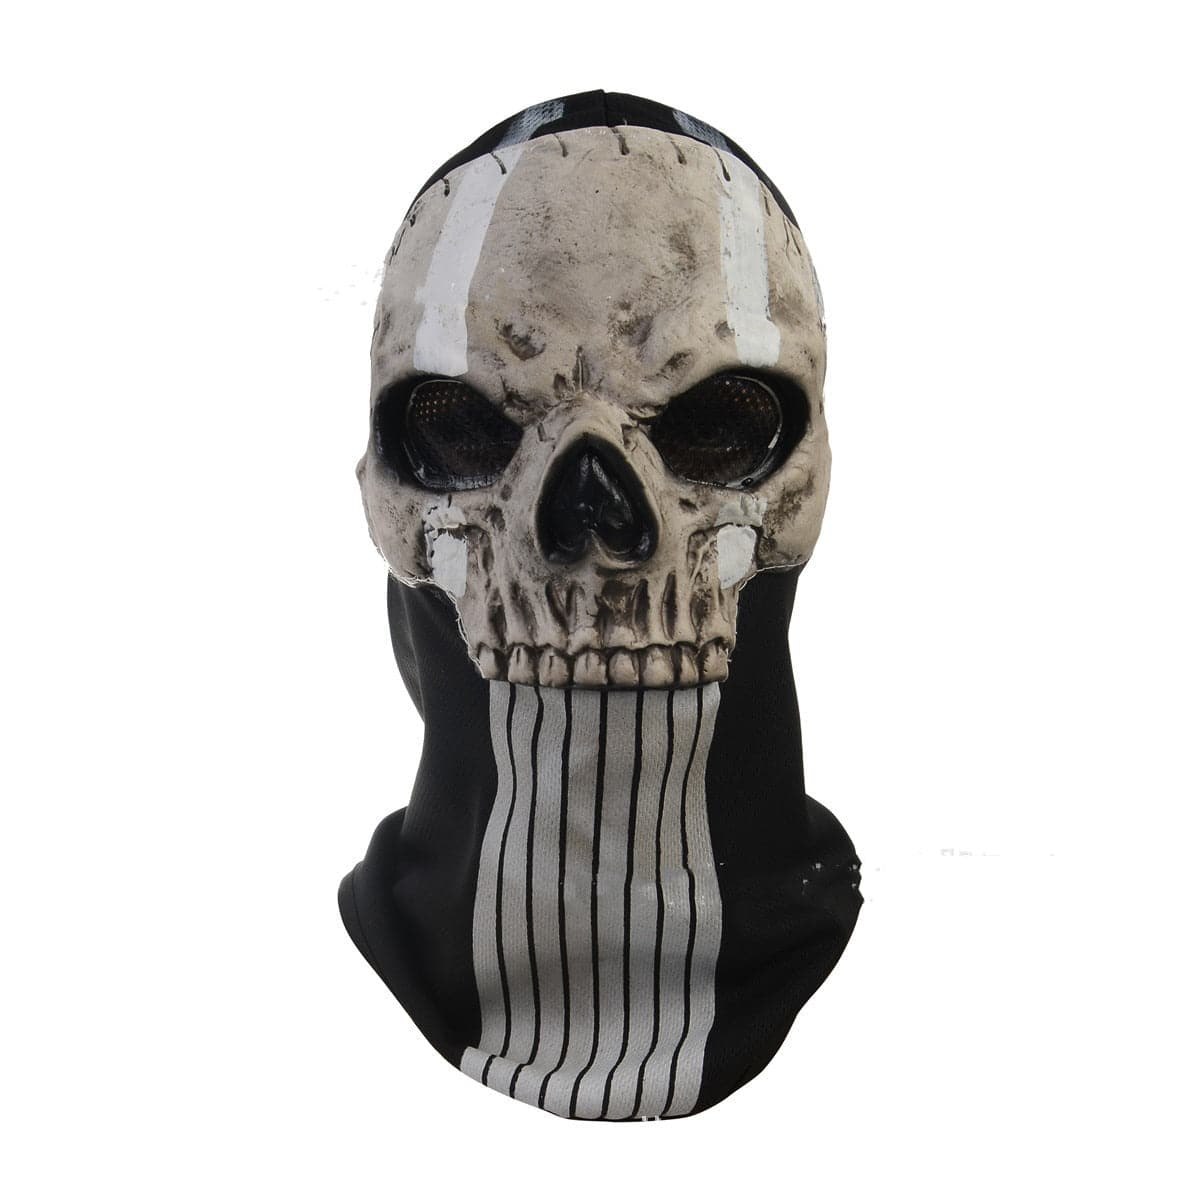 Unisex Horror Halloween Skull Mask - Call of Duty Latex Headgear Cosplay